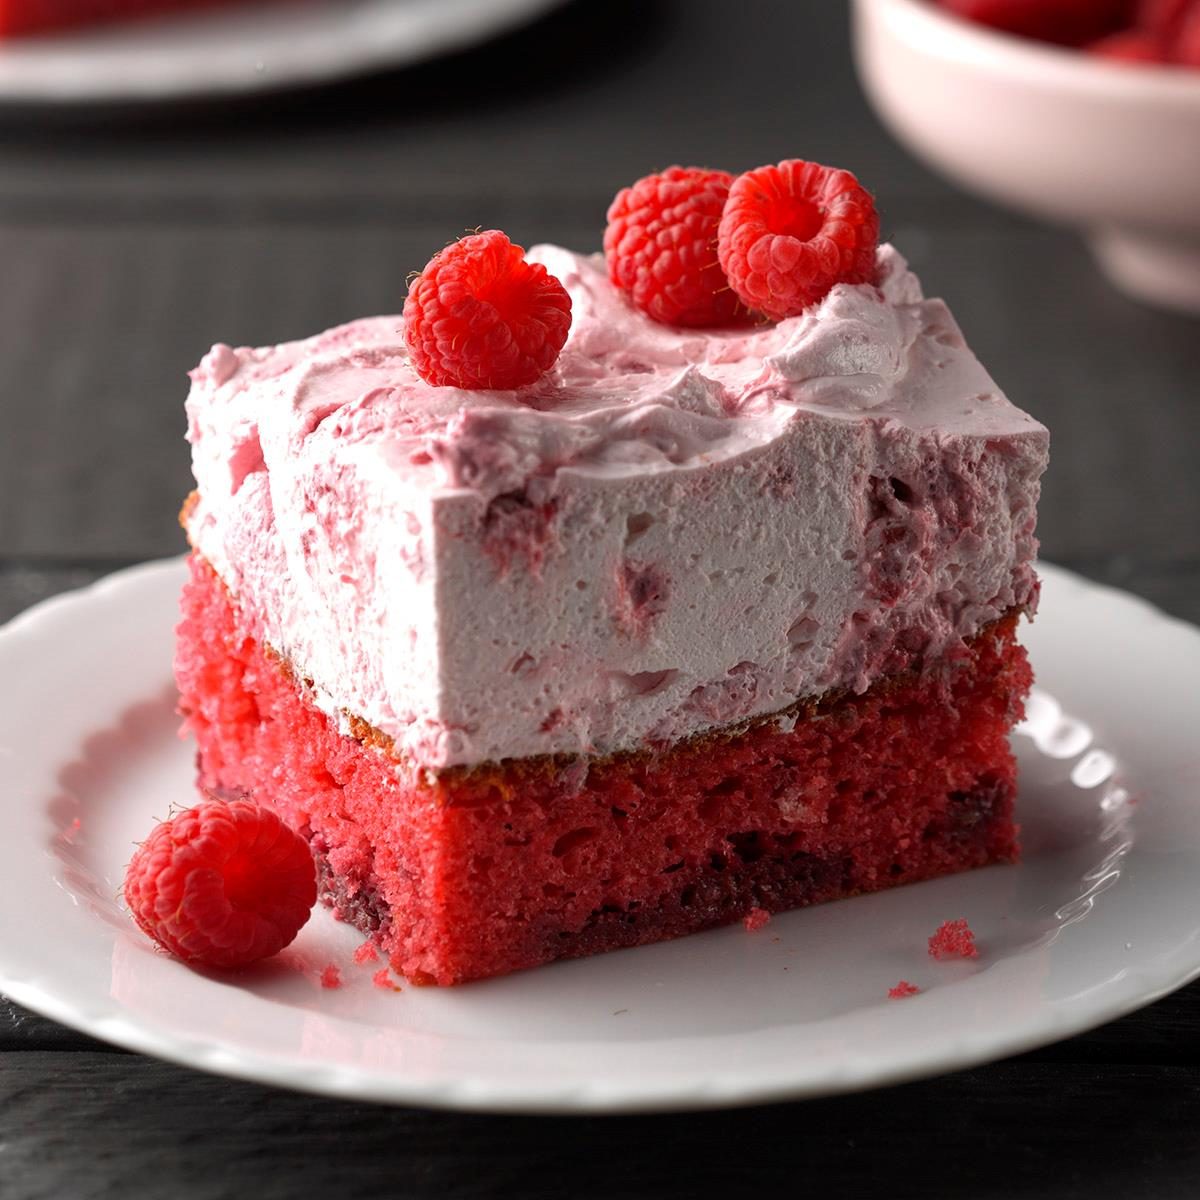 Raspberry Cake Recipe: How to Make It